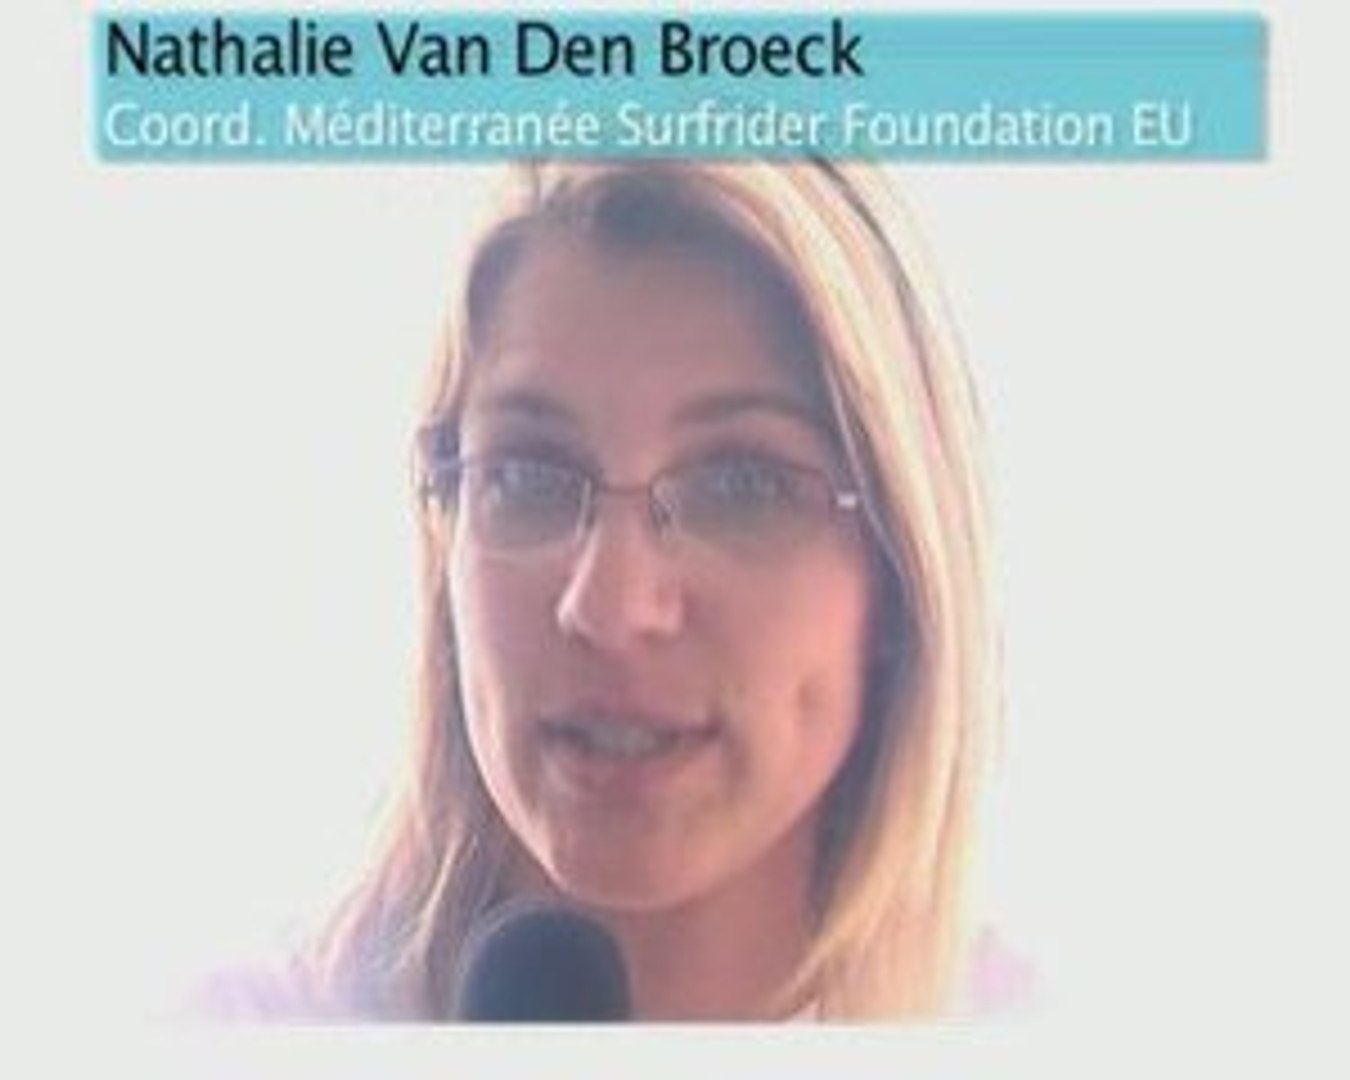 Nathalie Van Den Broeck de SURFRIDER FOUNDATION EU /01 - Vidéo Dailymotion